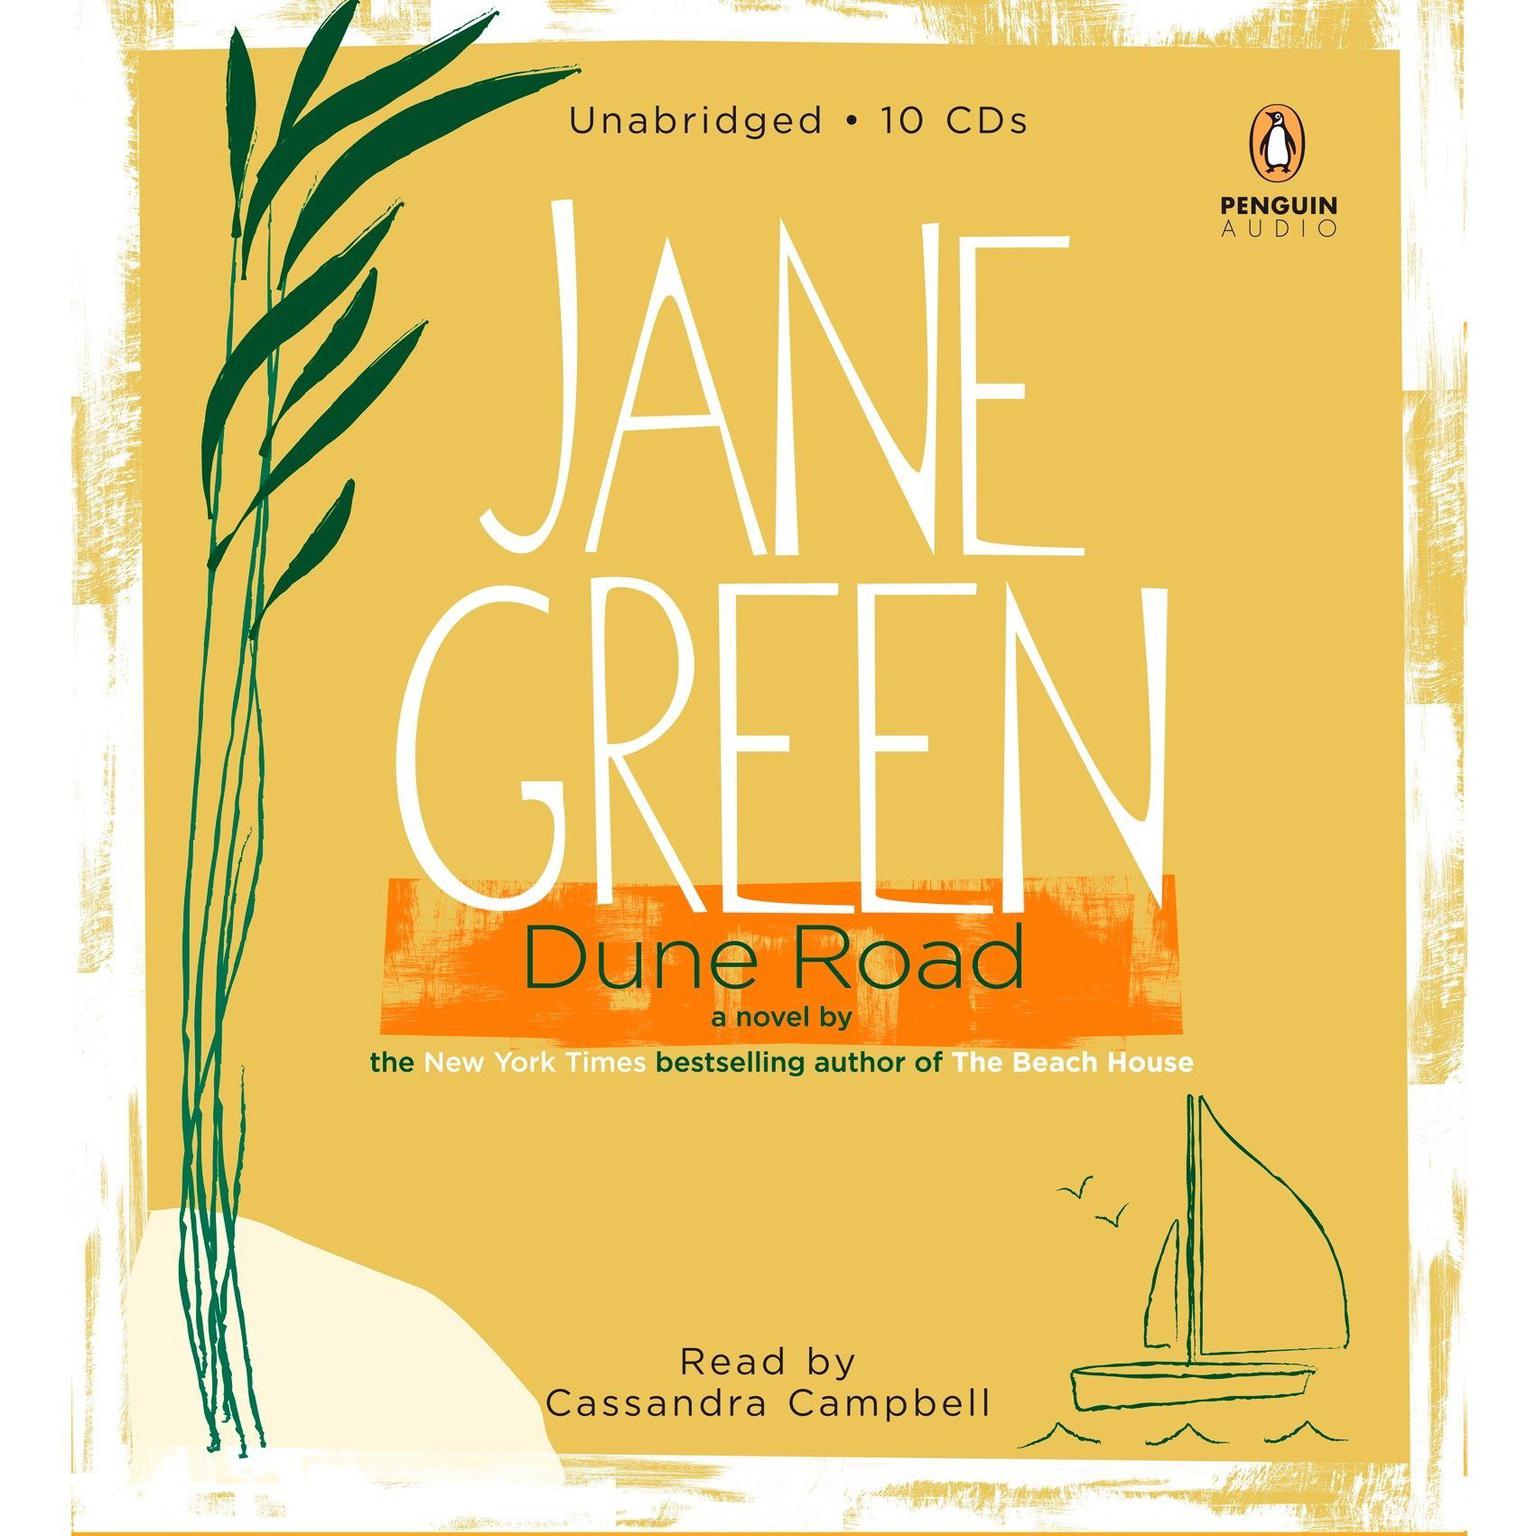 Dune Road: A Novel Audiobook, by Jane Green